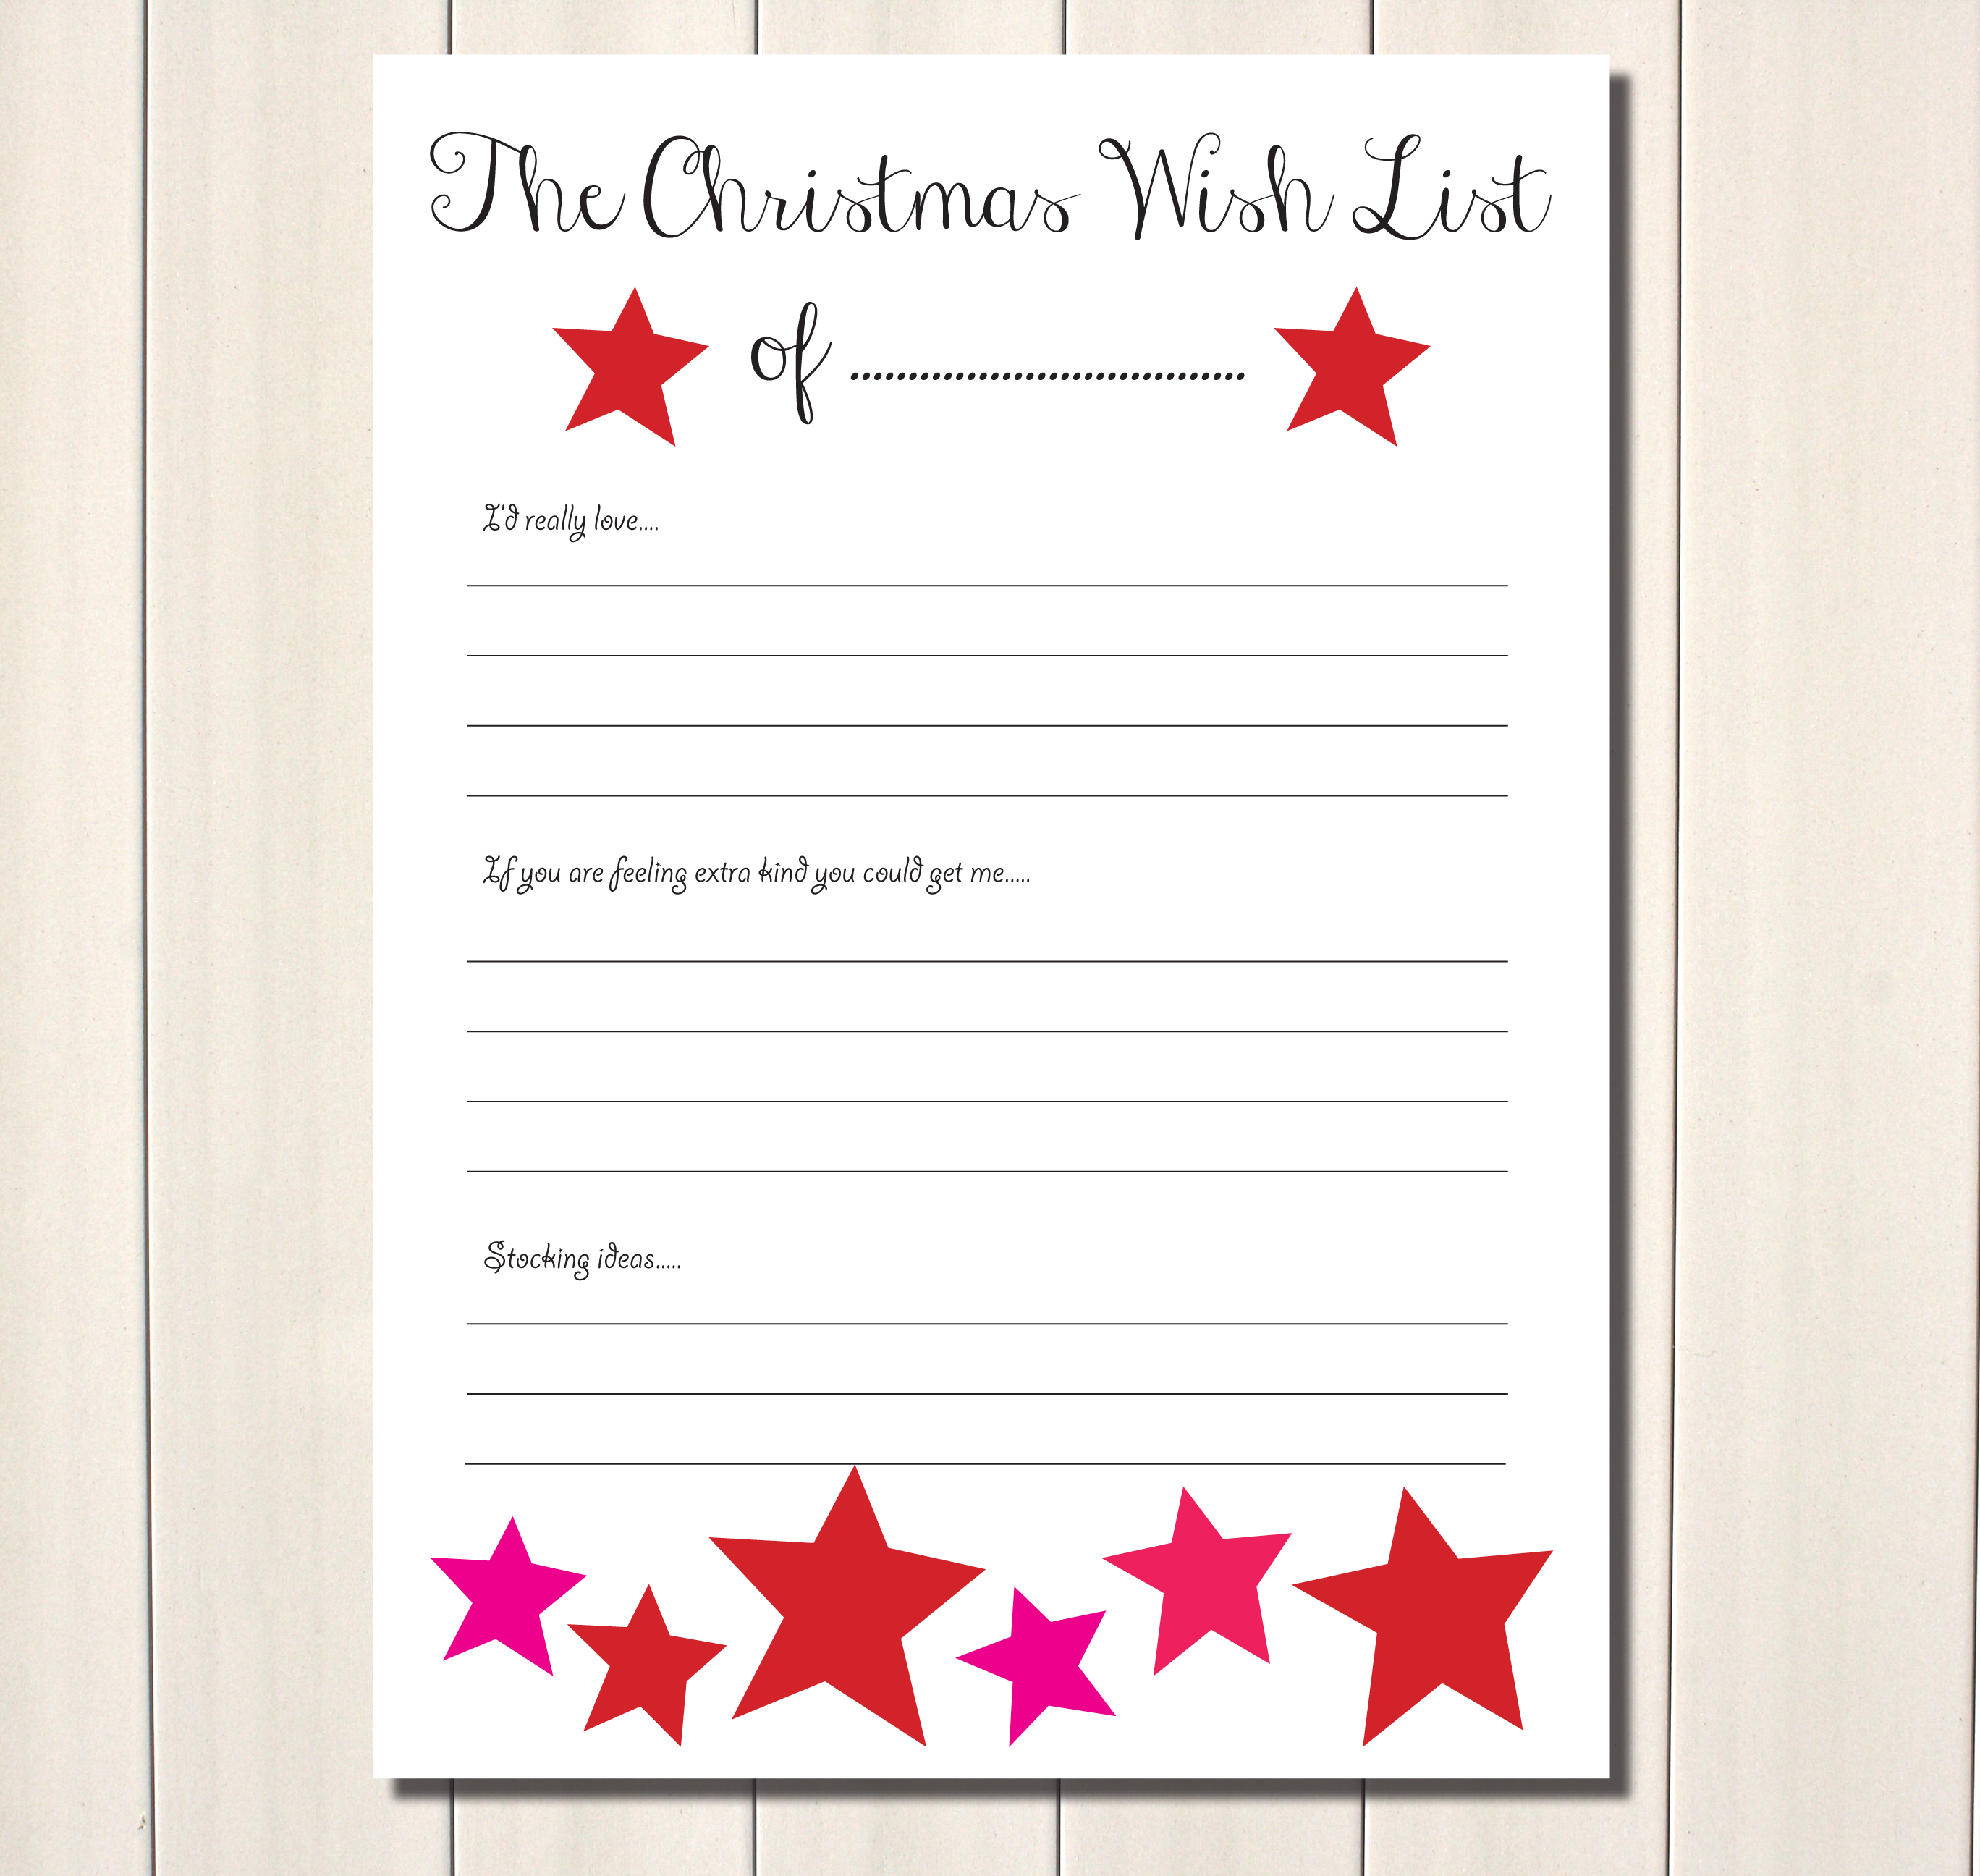 Wish List For Christmas Template